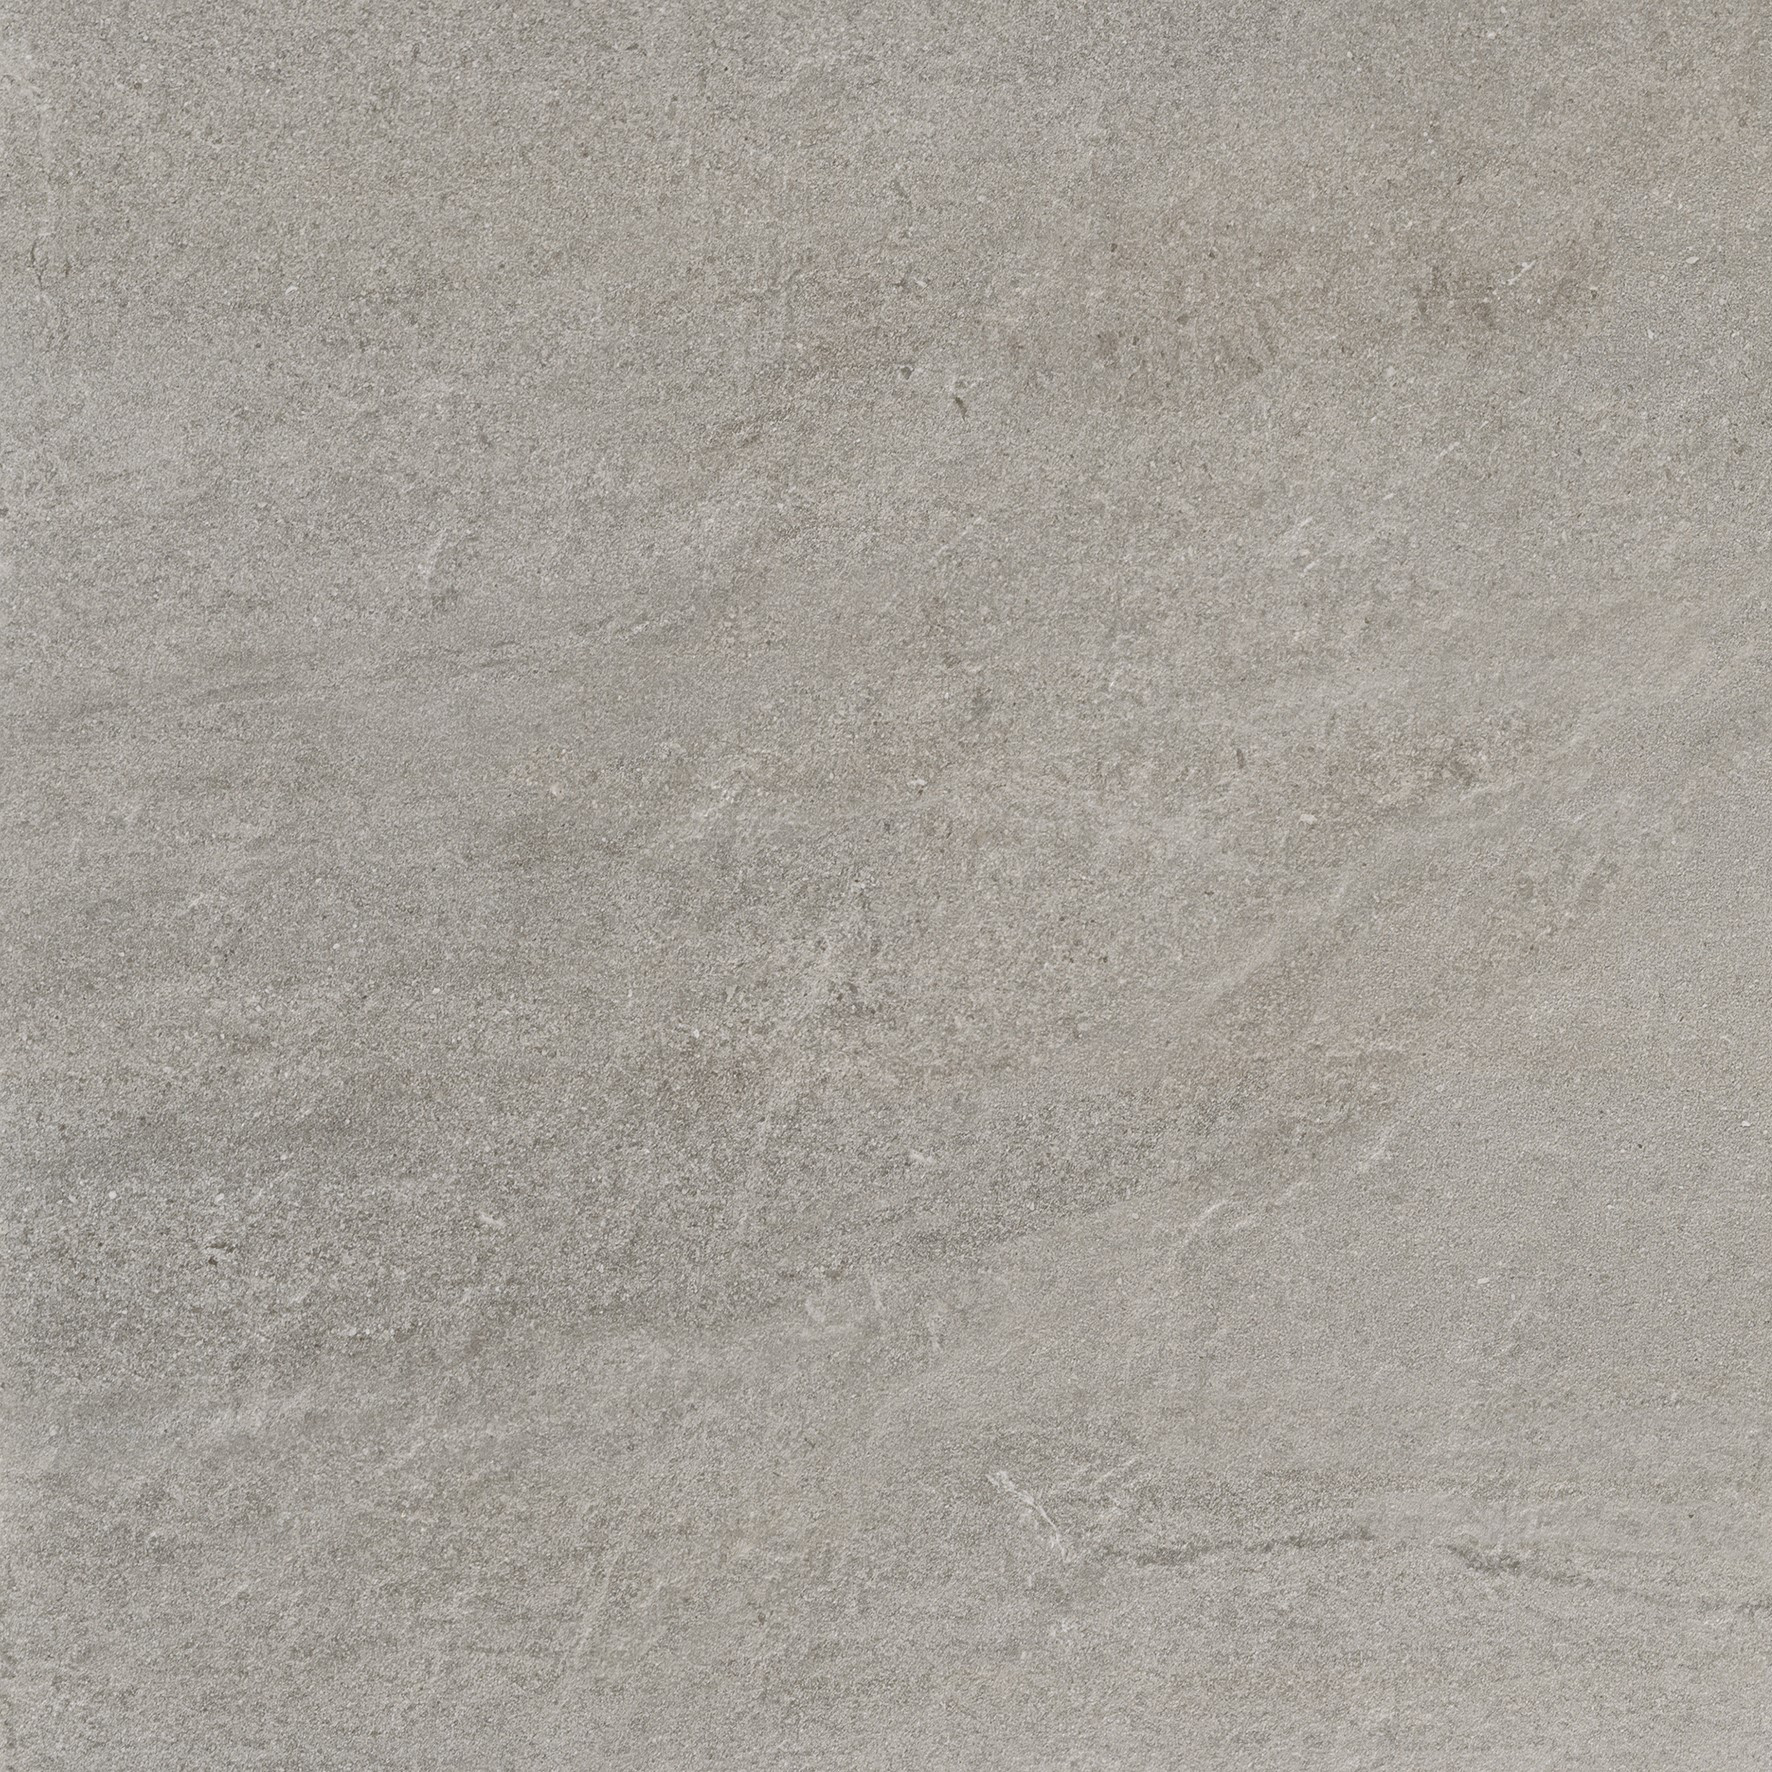 NIP Steinoptik Stone Grey 60x60cm